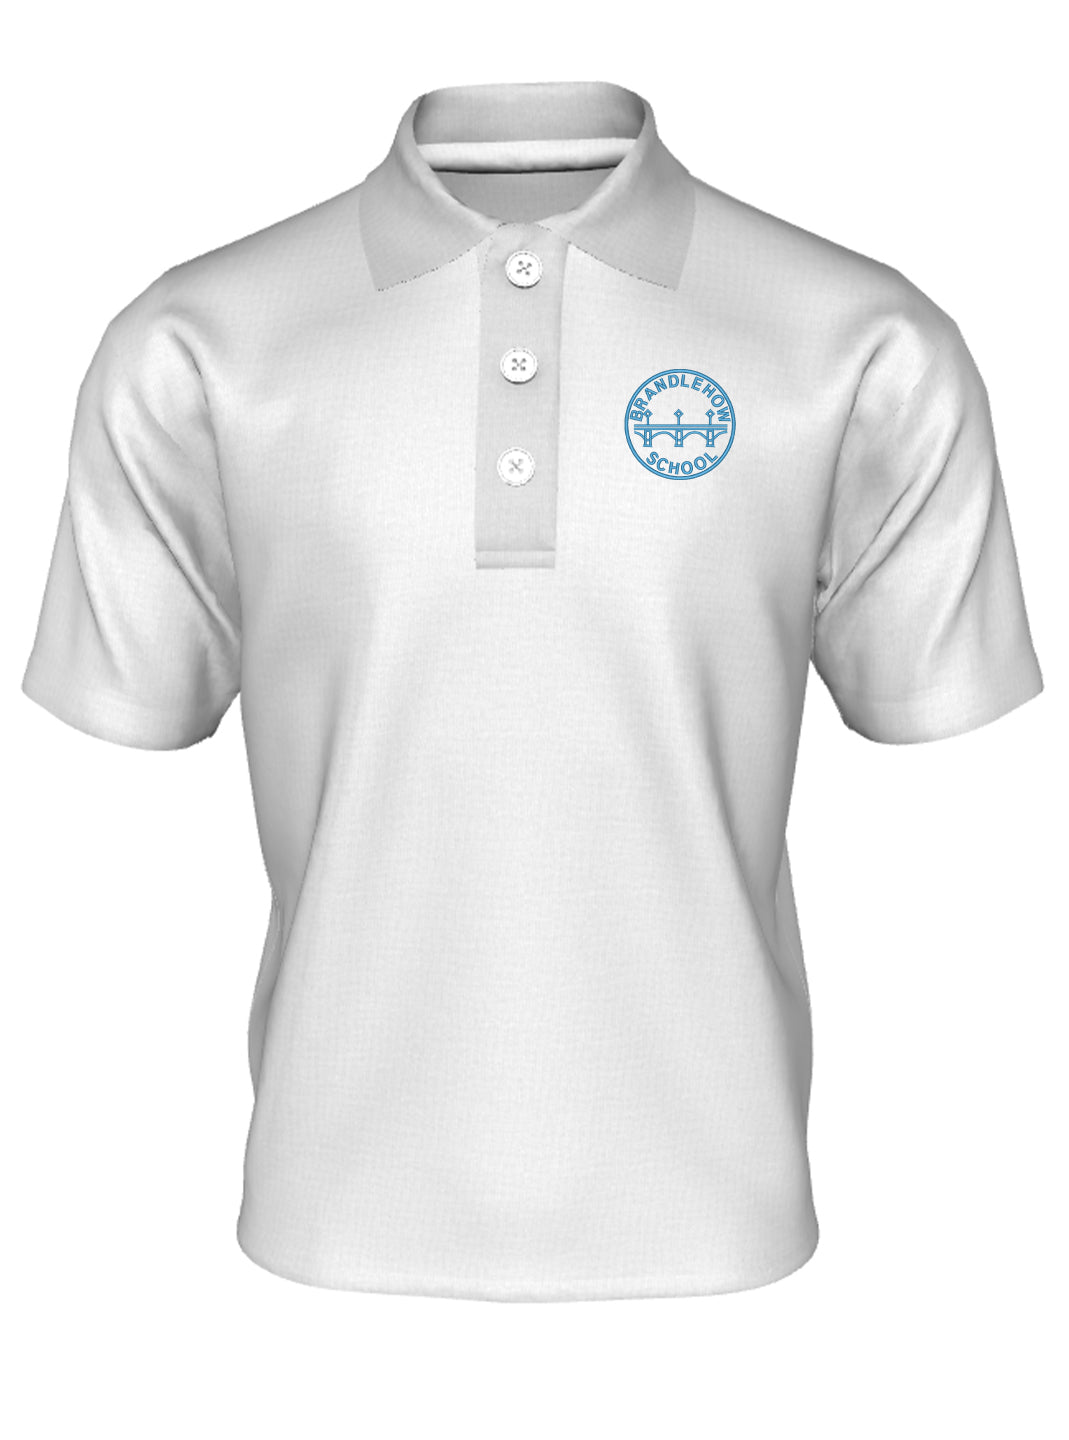 Brandlehow Primary School - Polo Shirt - White - School Uniform Shop